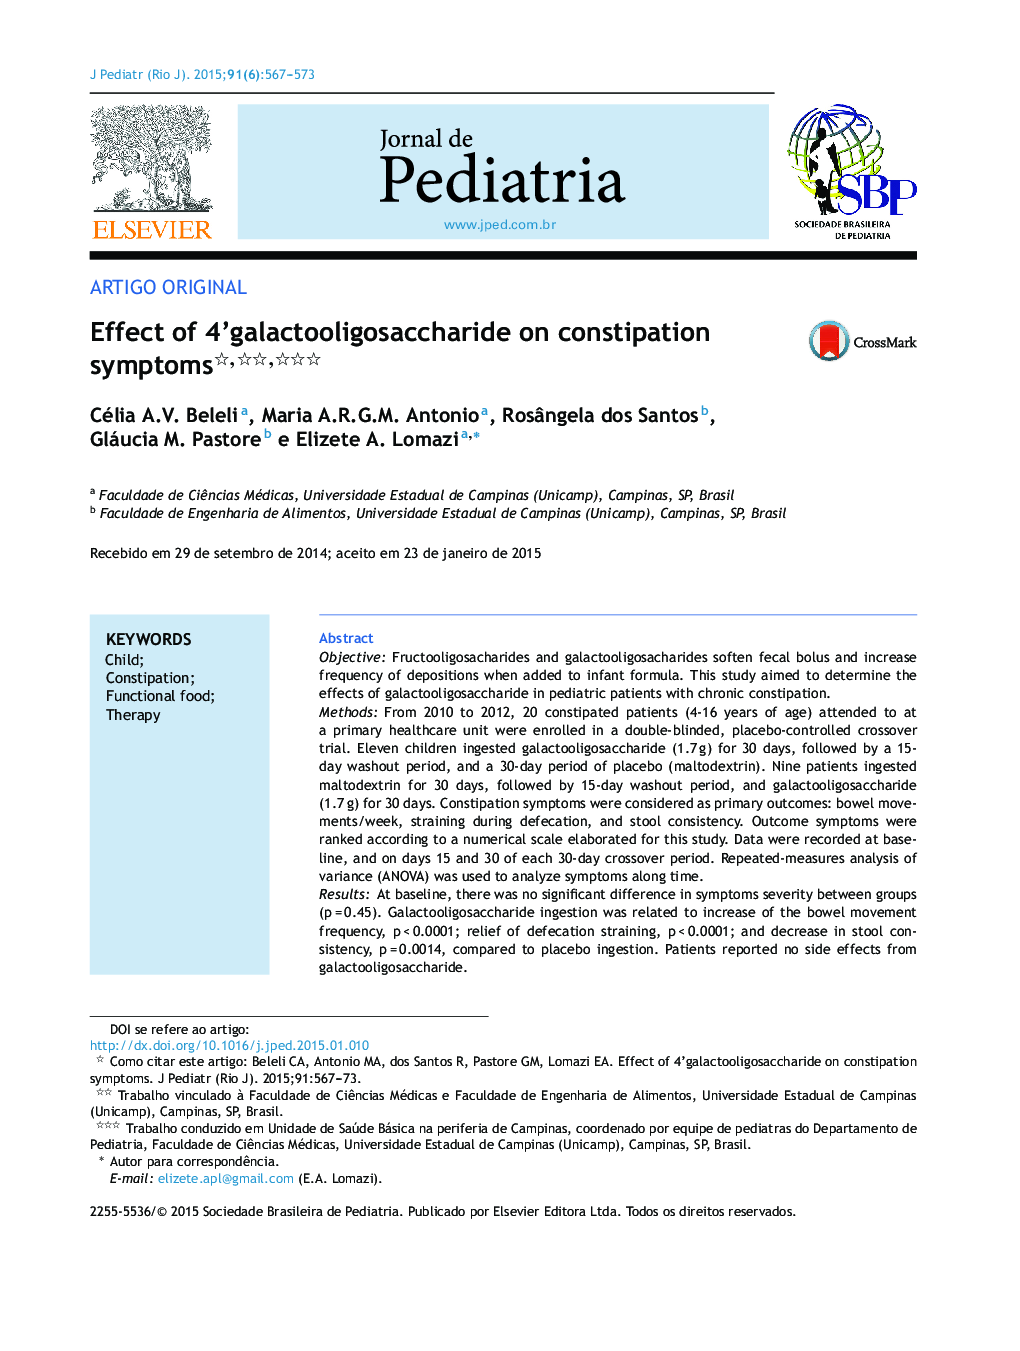 Effect of 4’galactooligosaccharide on constipation symptoms 